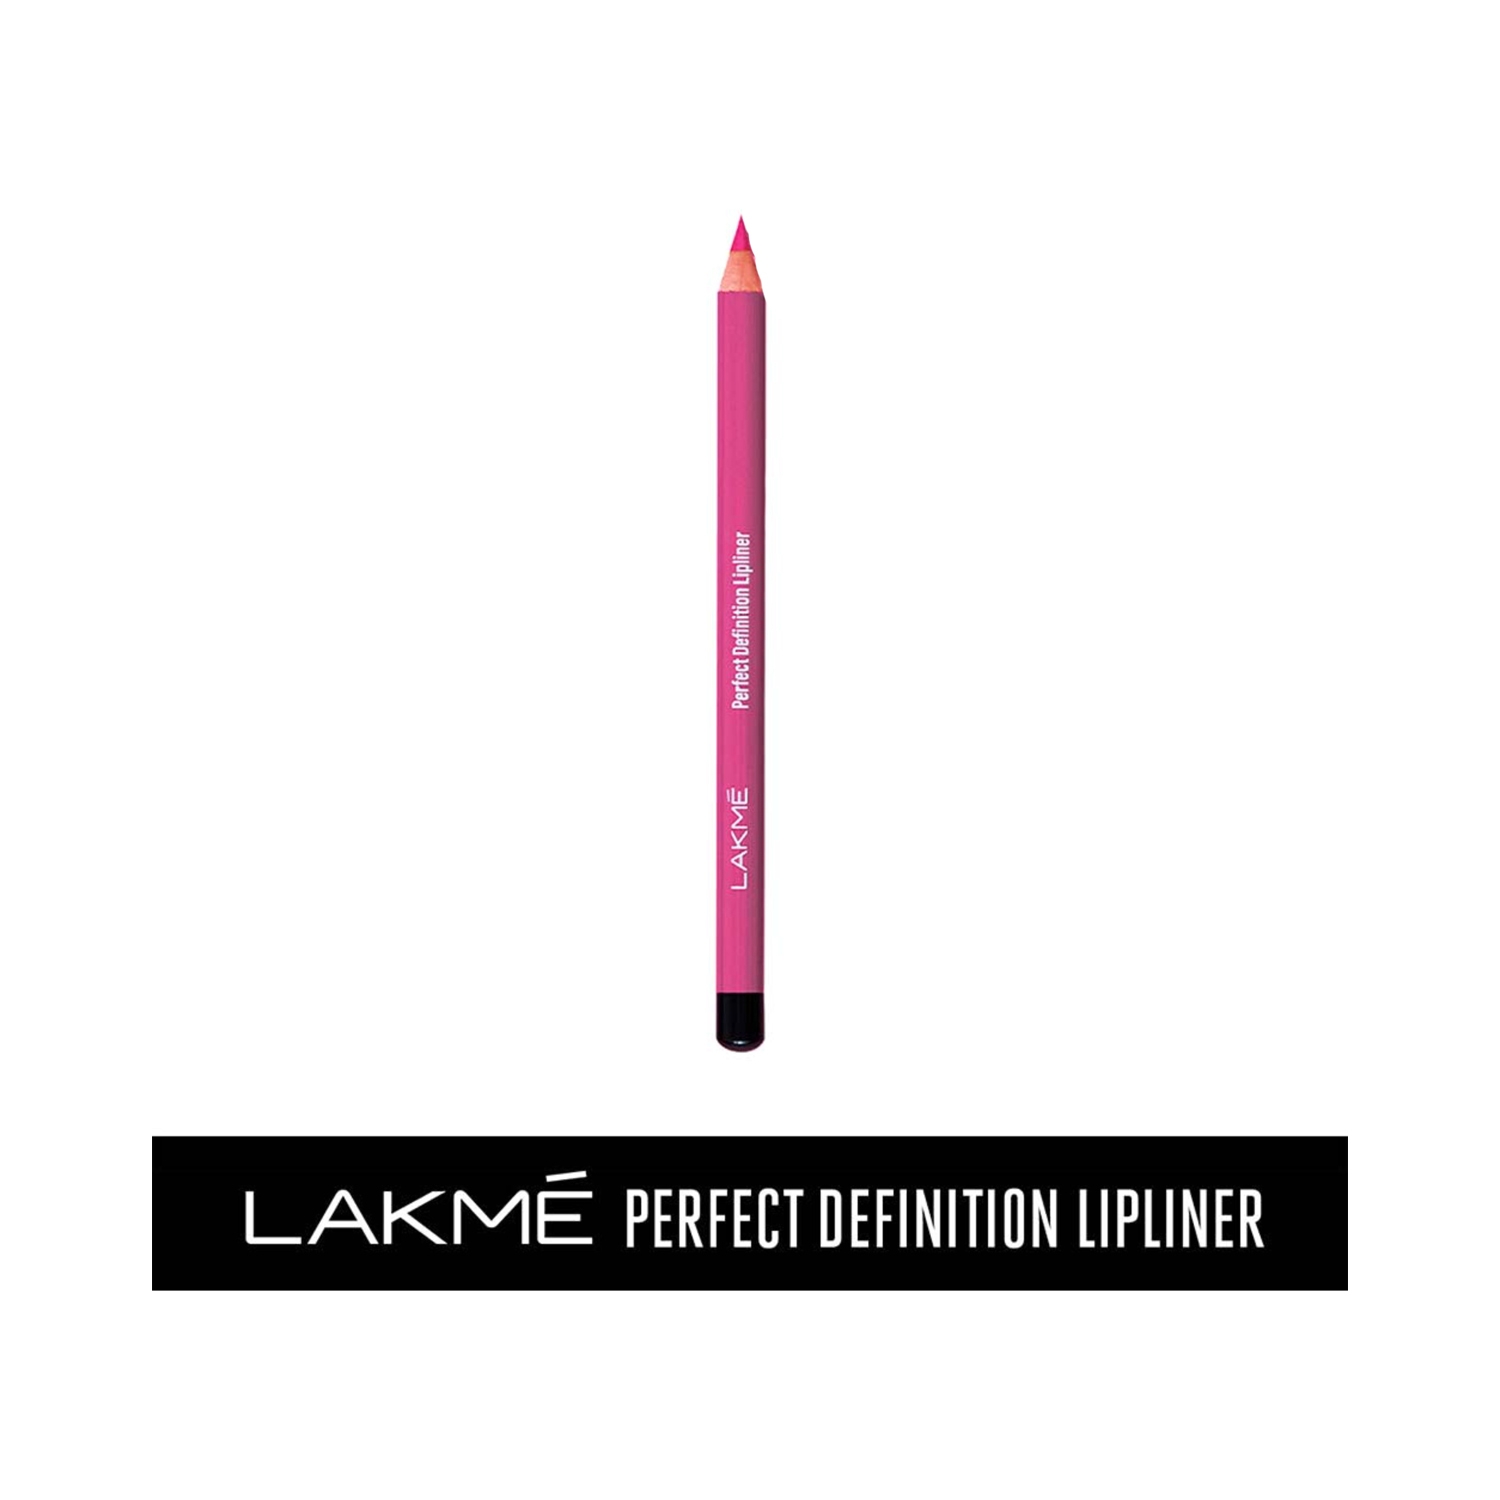 Lakme | Lakme Perfect Definition Lip Liner - Pink Sparkle (0.78g)